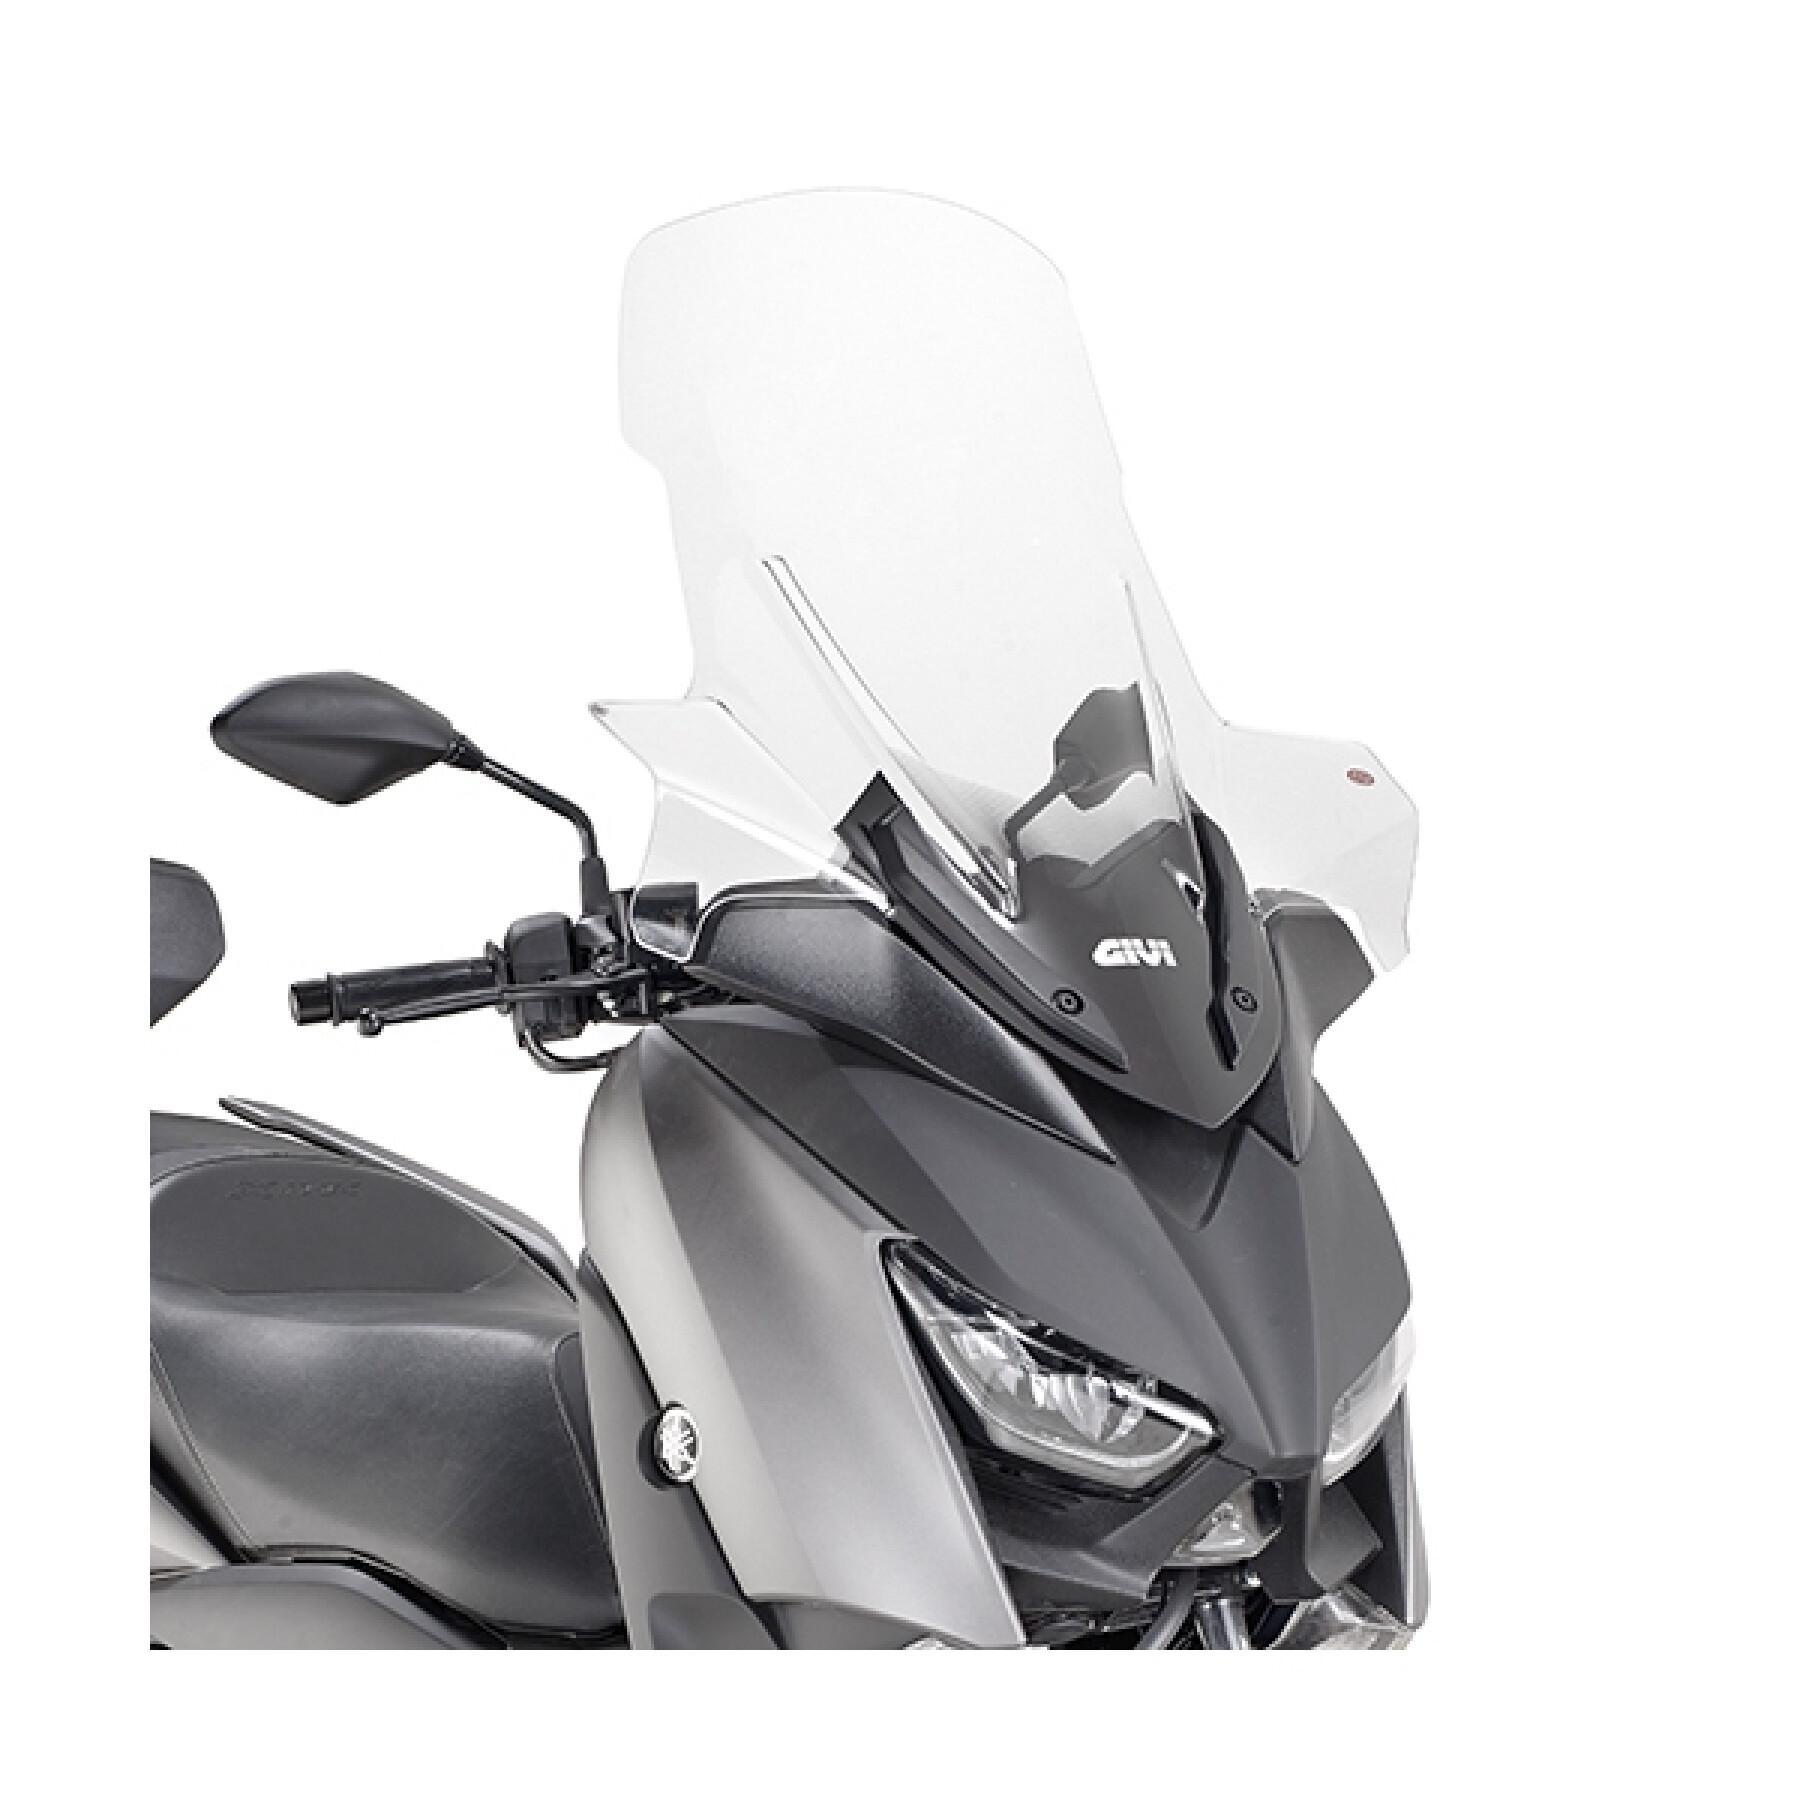 Szyba przednia skutera Givi Yamaha X-Max 125 / 300 / 400 (2018 à 2019)